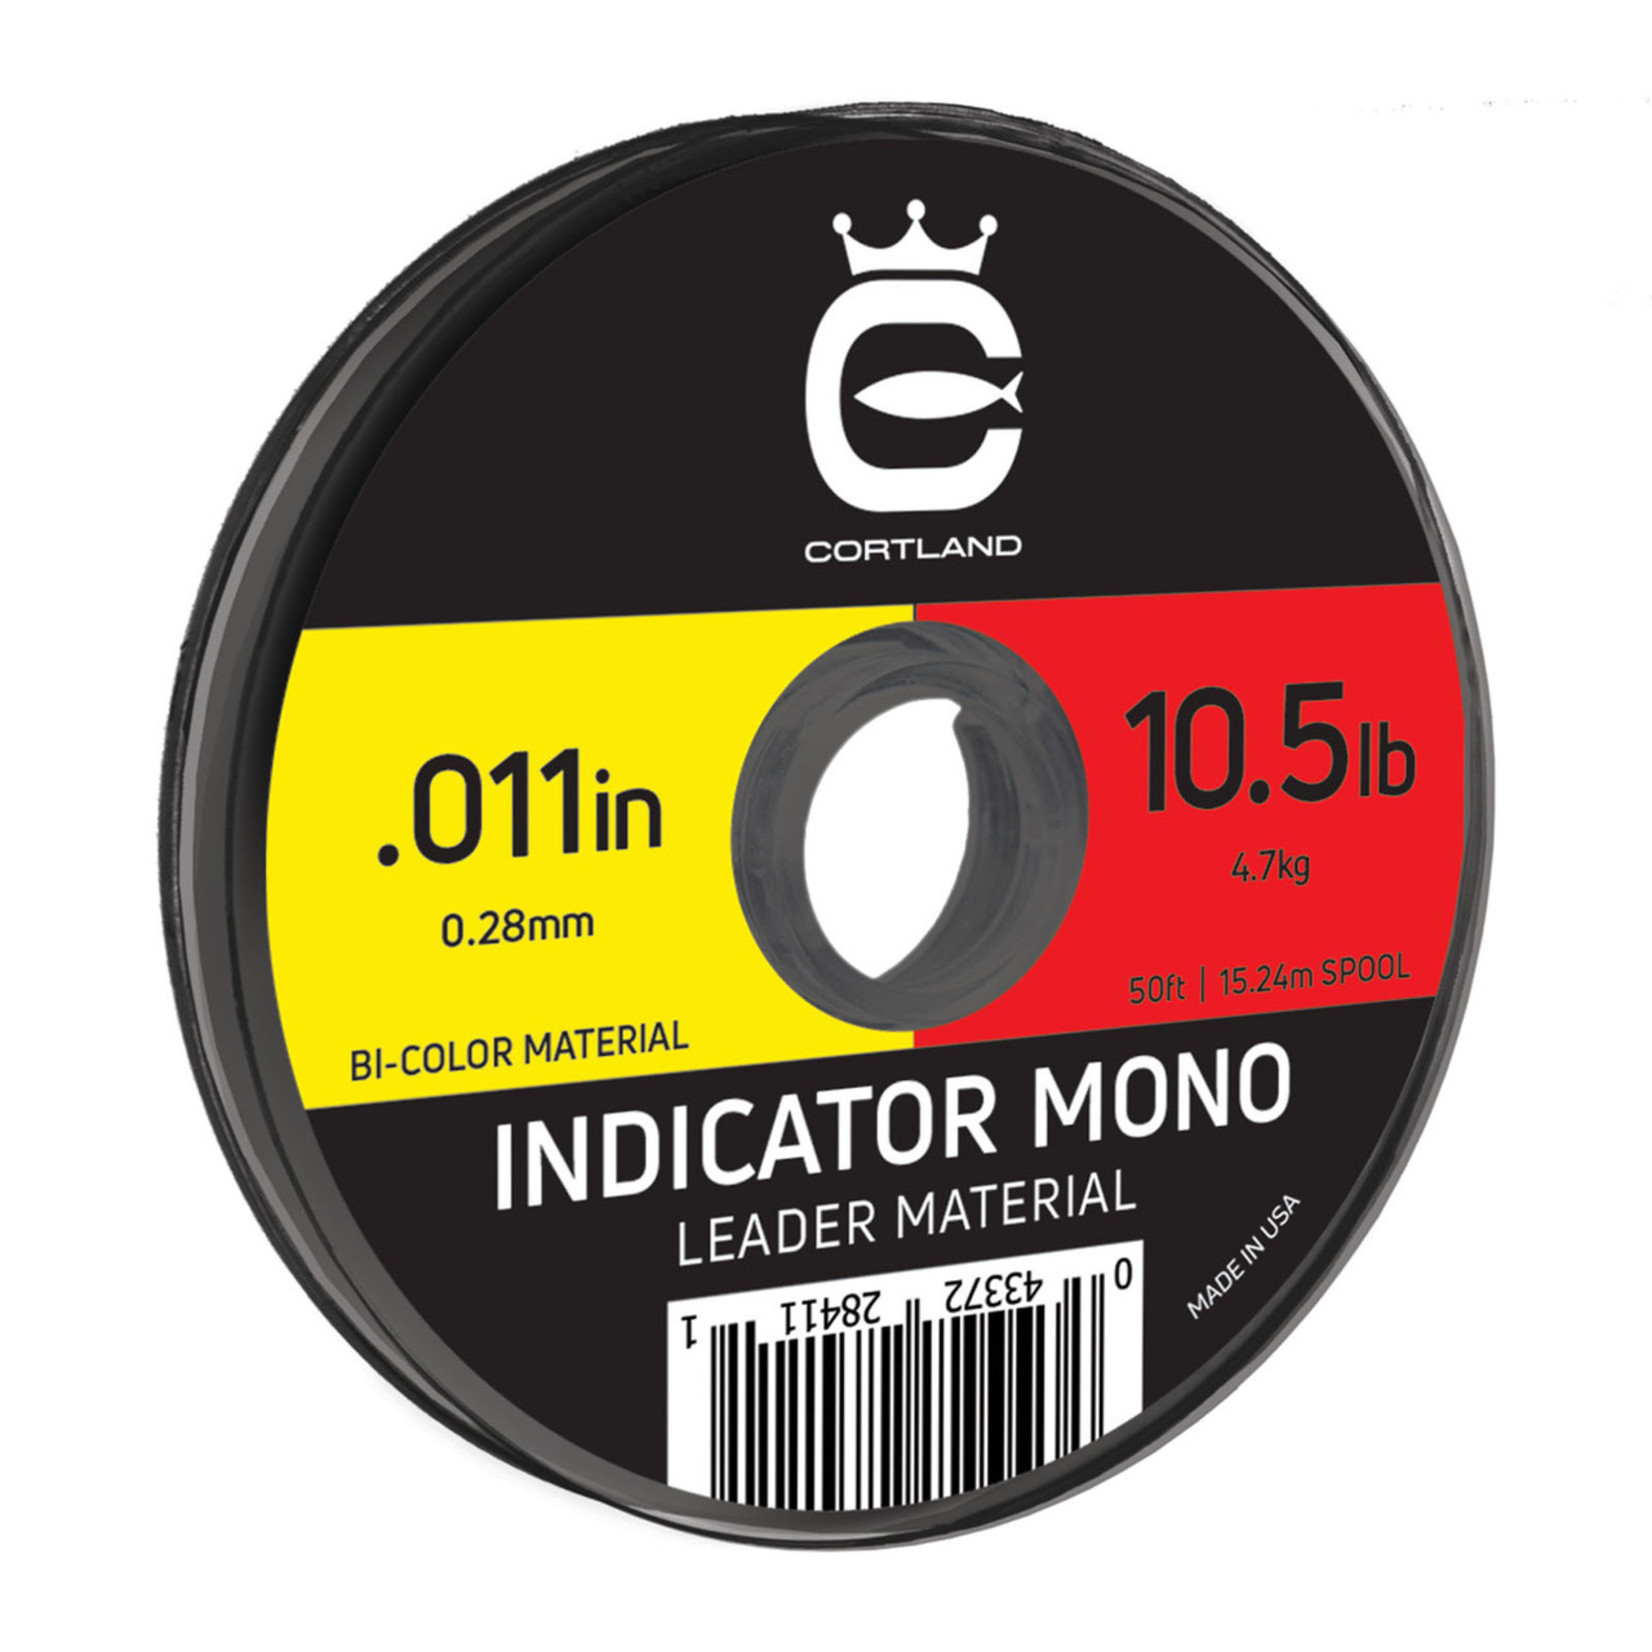 Cortland Cortland Indicator Mono Leader Material Bi-Color Red and Yellow